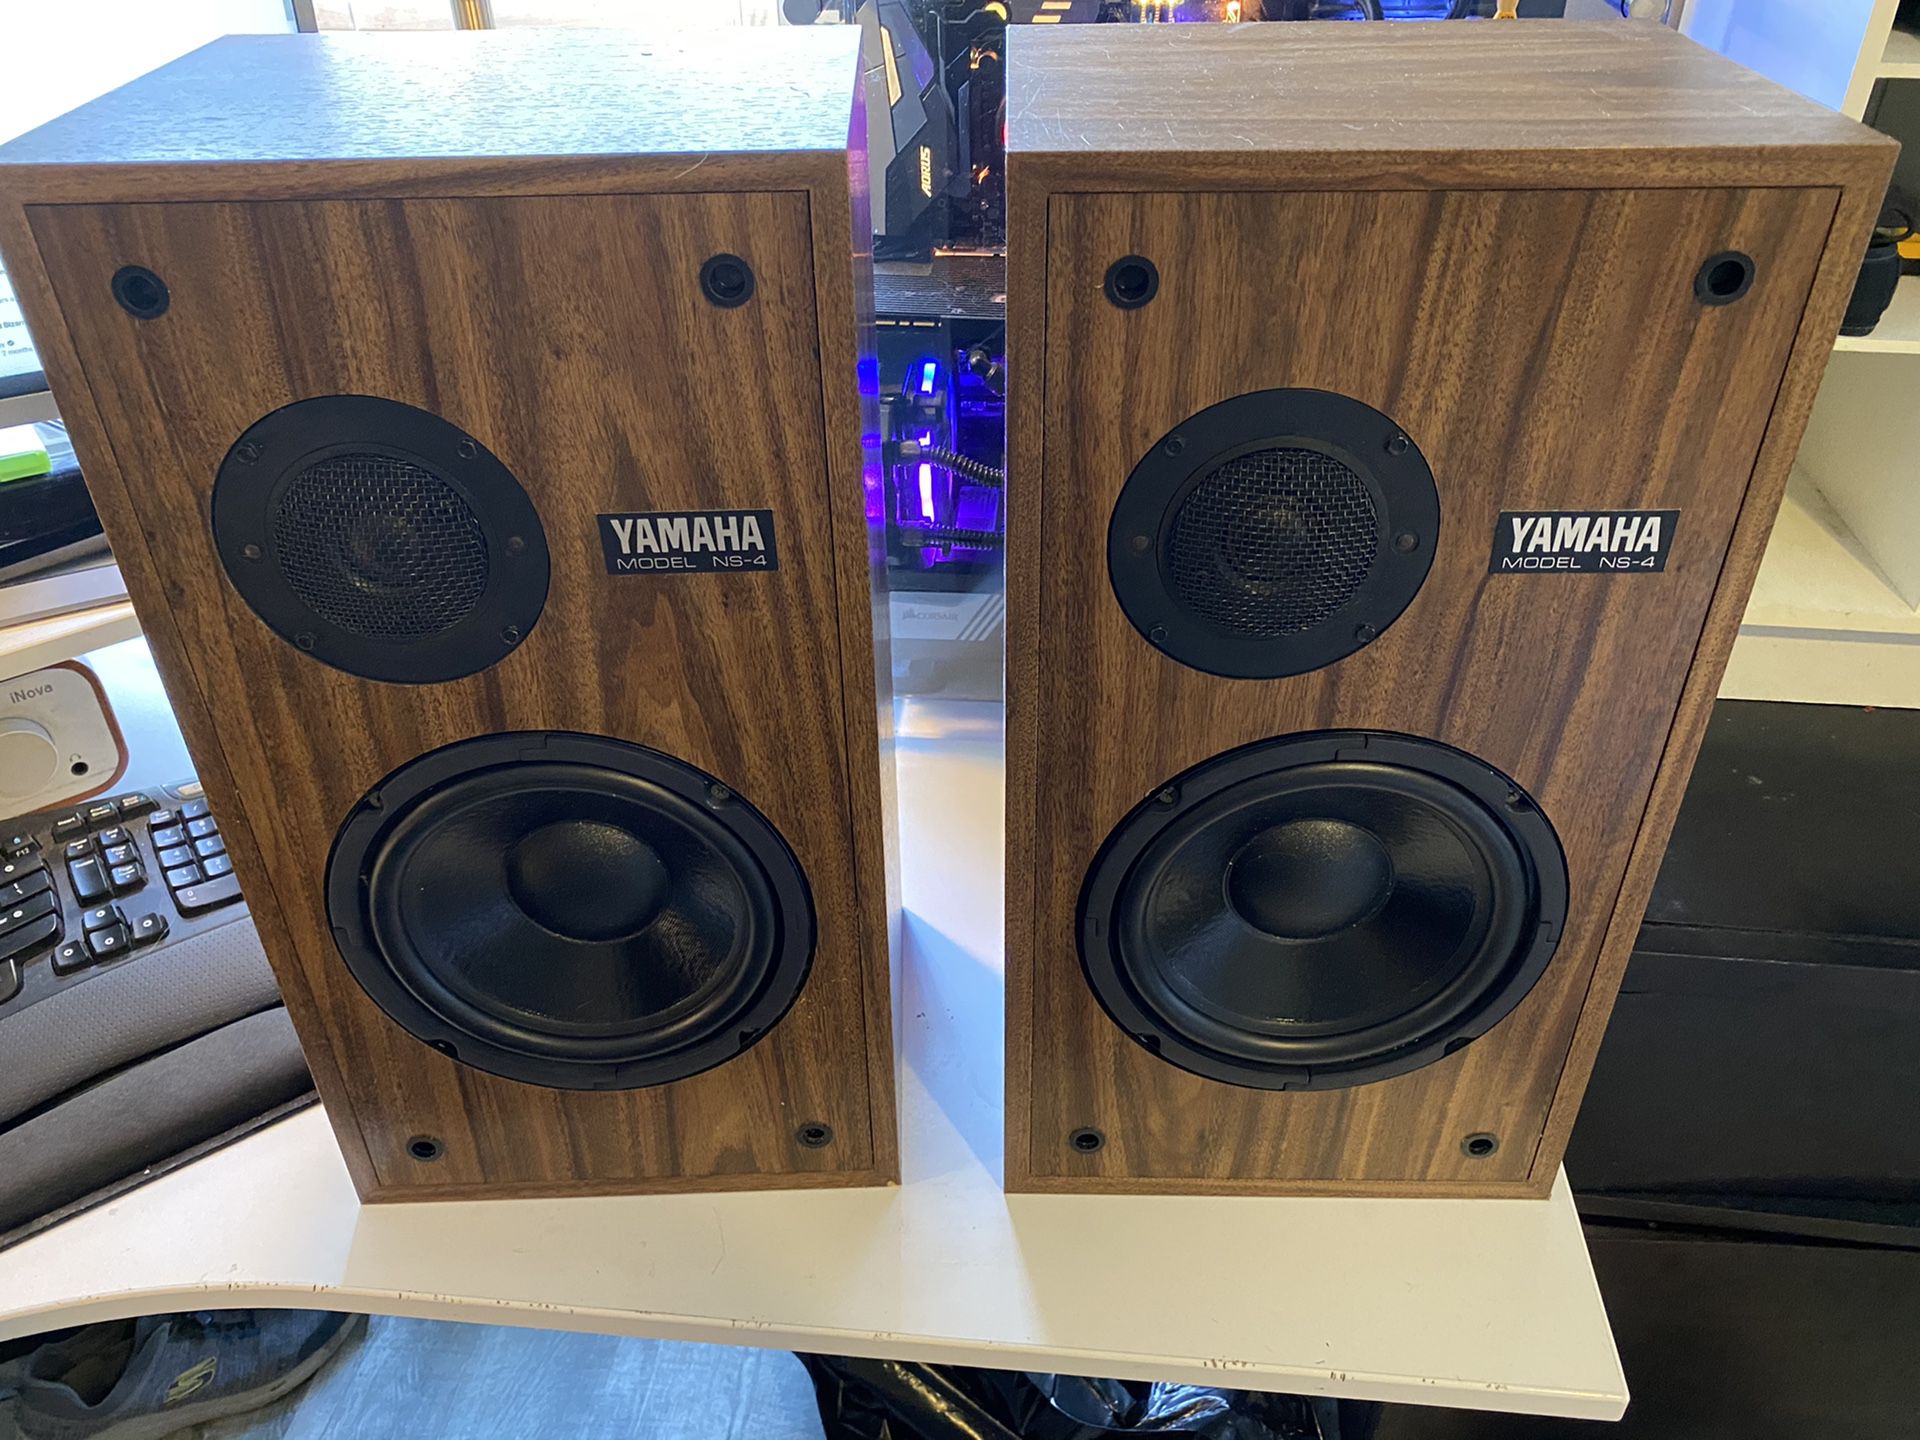 Yamaha NS-4 speakers